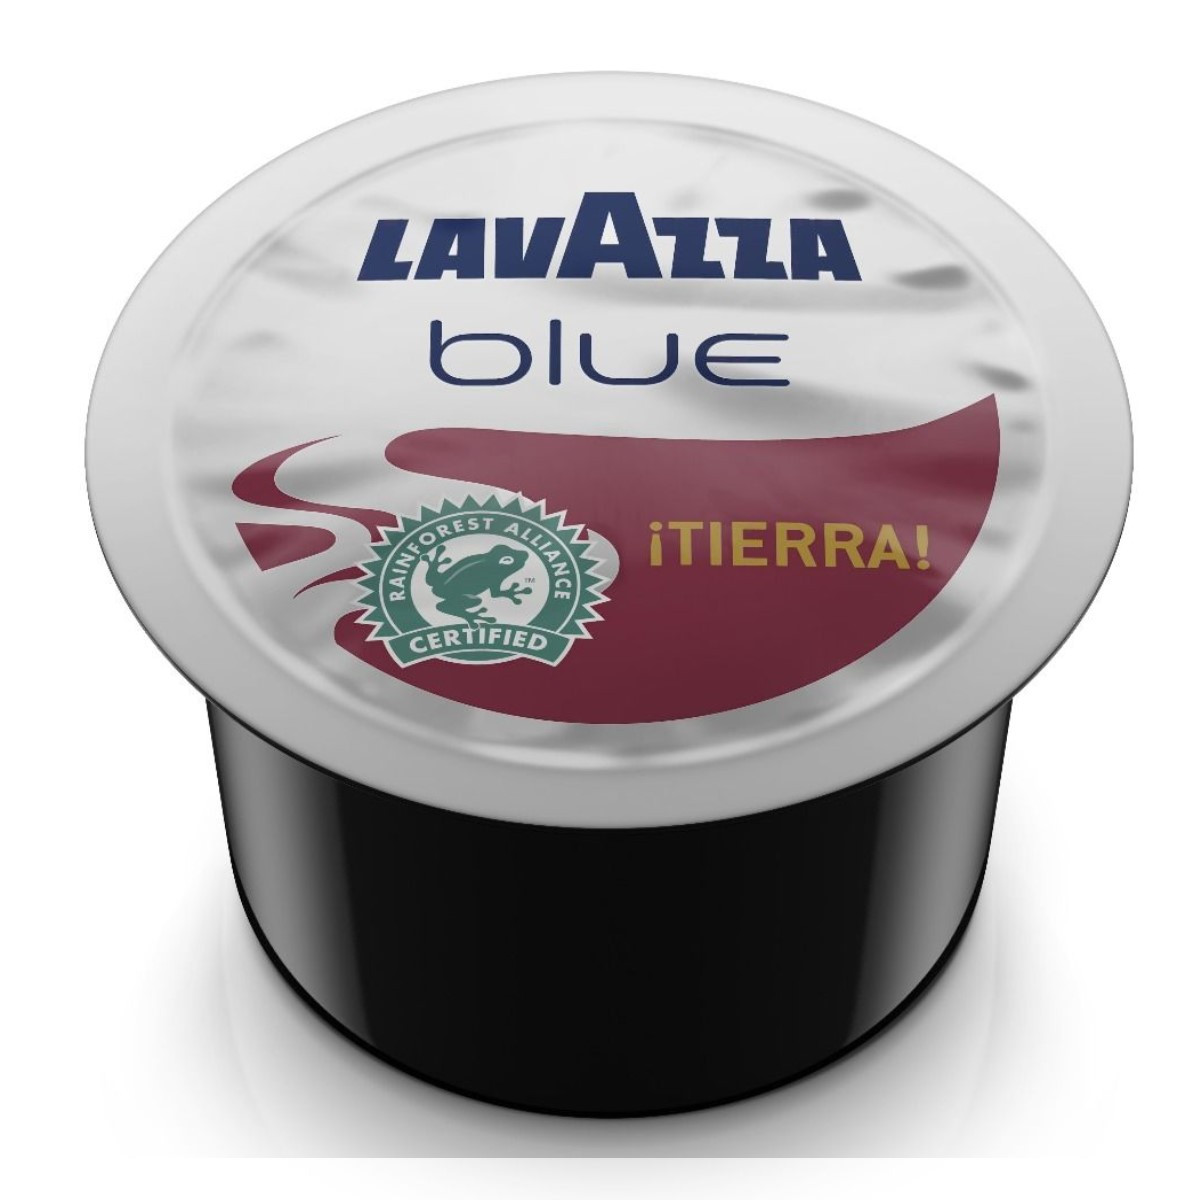 Blue Espresso Tierra 100 gab. Kafijas kapsulas